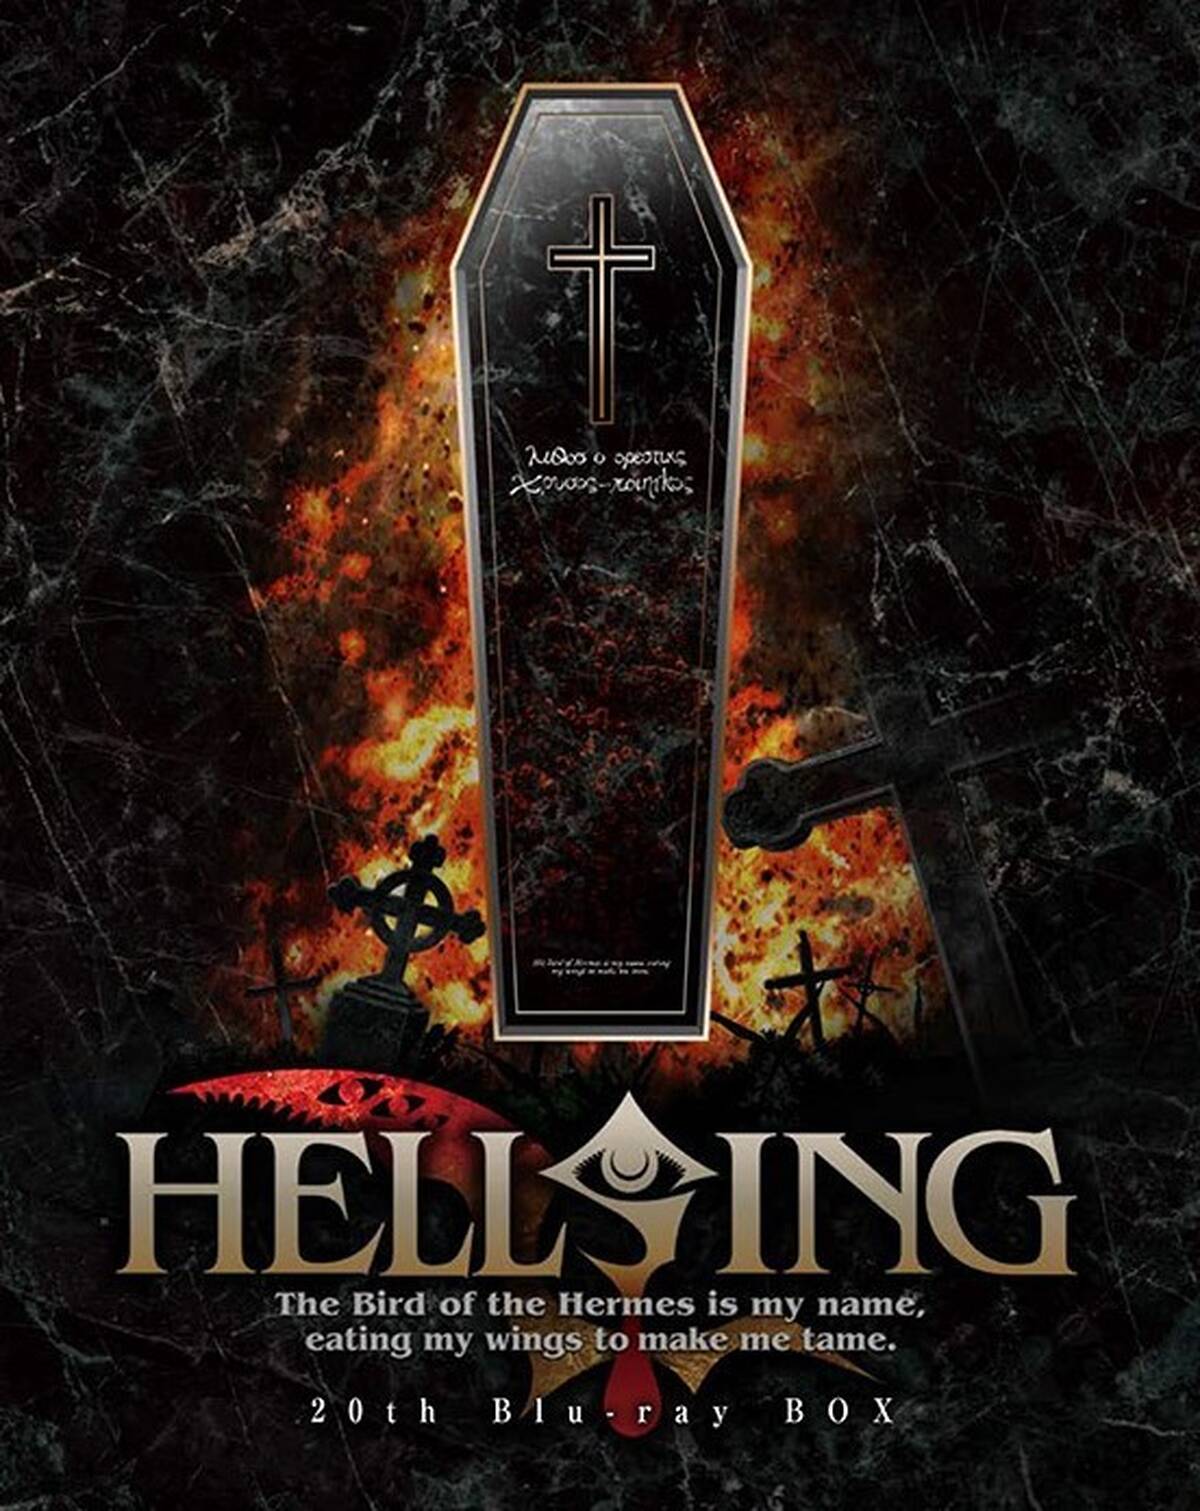 Hellsing thbox発売決定 コミック連載開始周年の記念ova全話入りbox 11月28日発売決定 アキバ総研